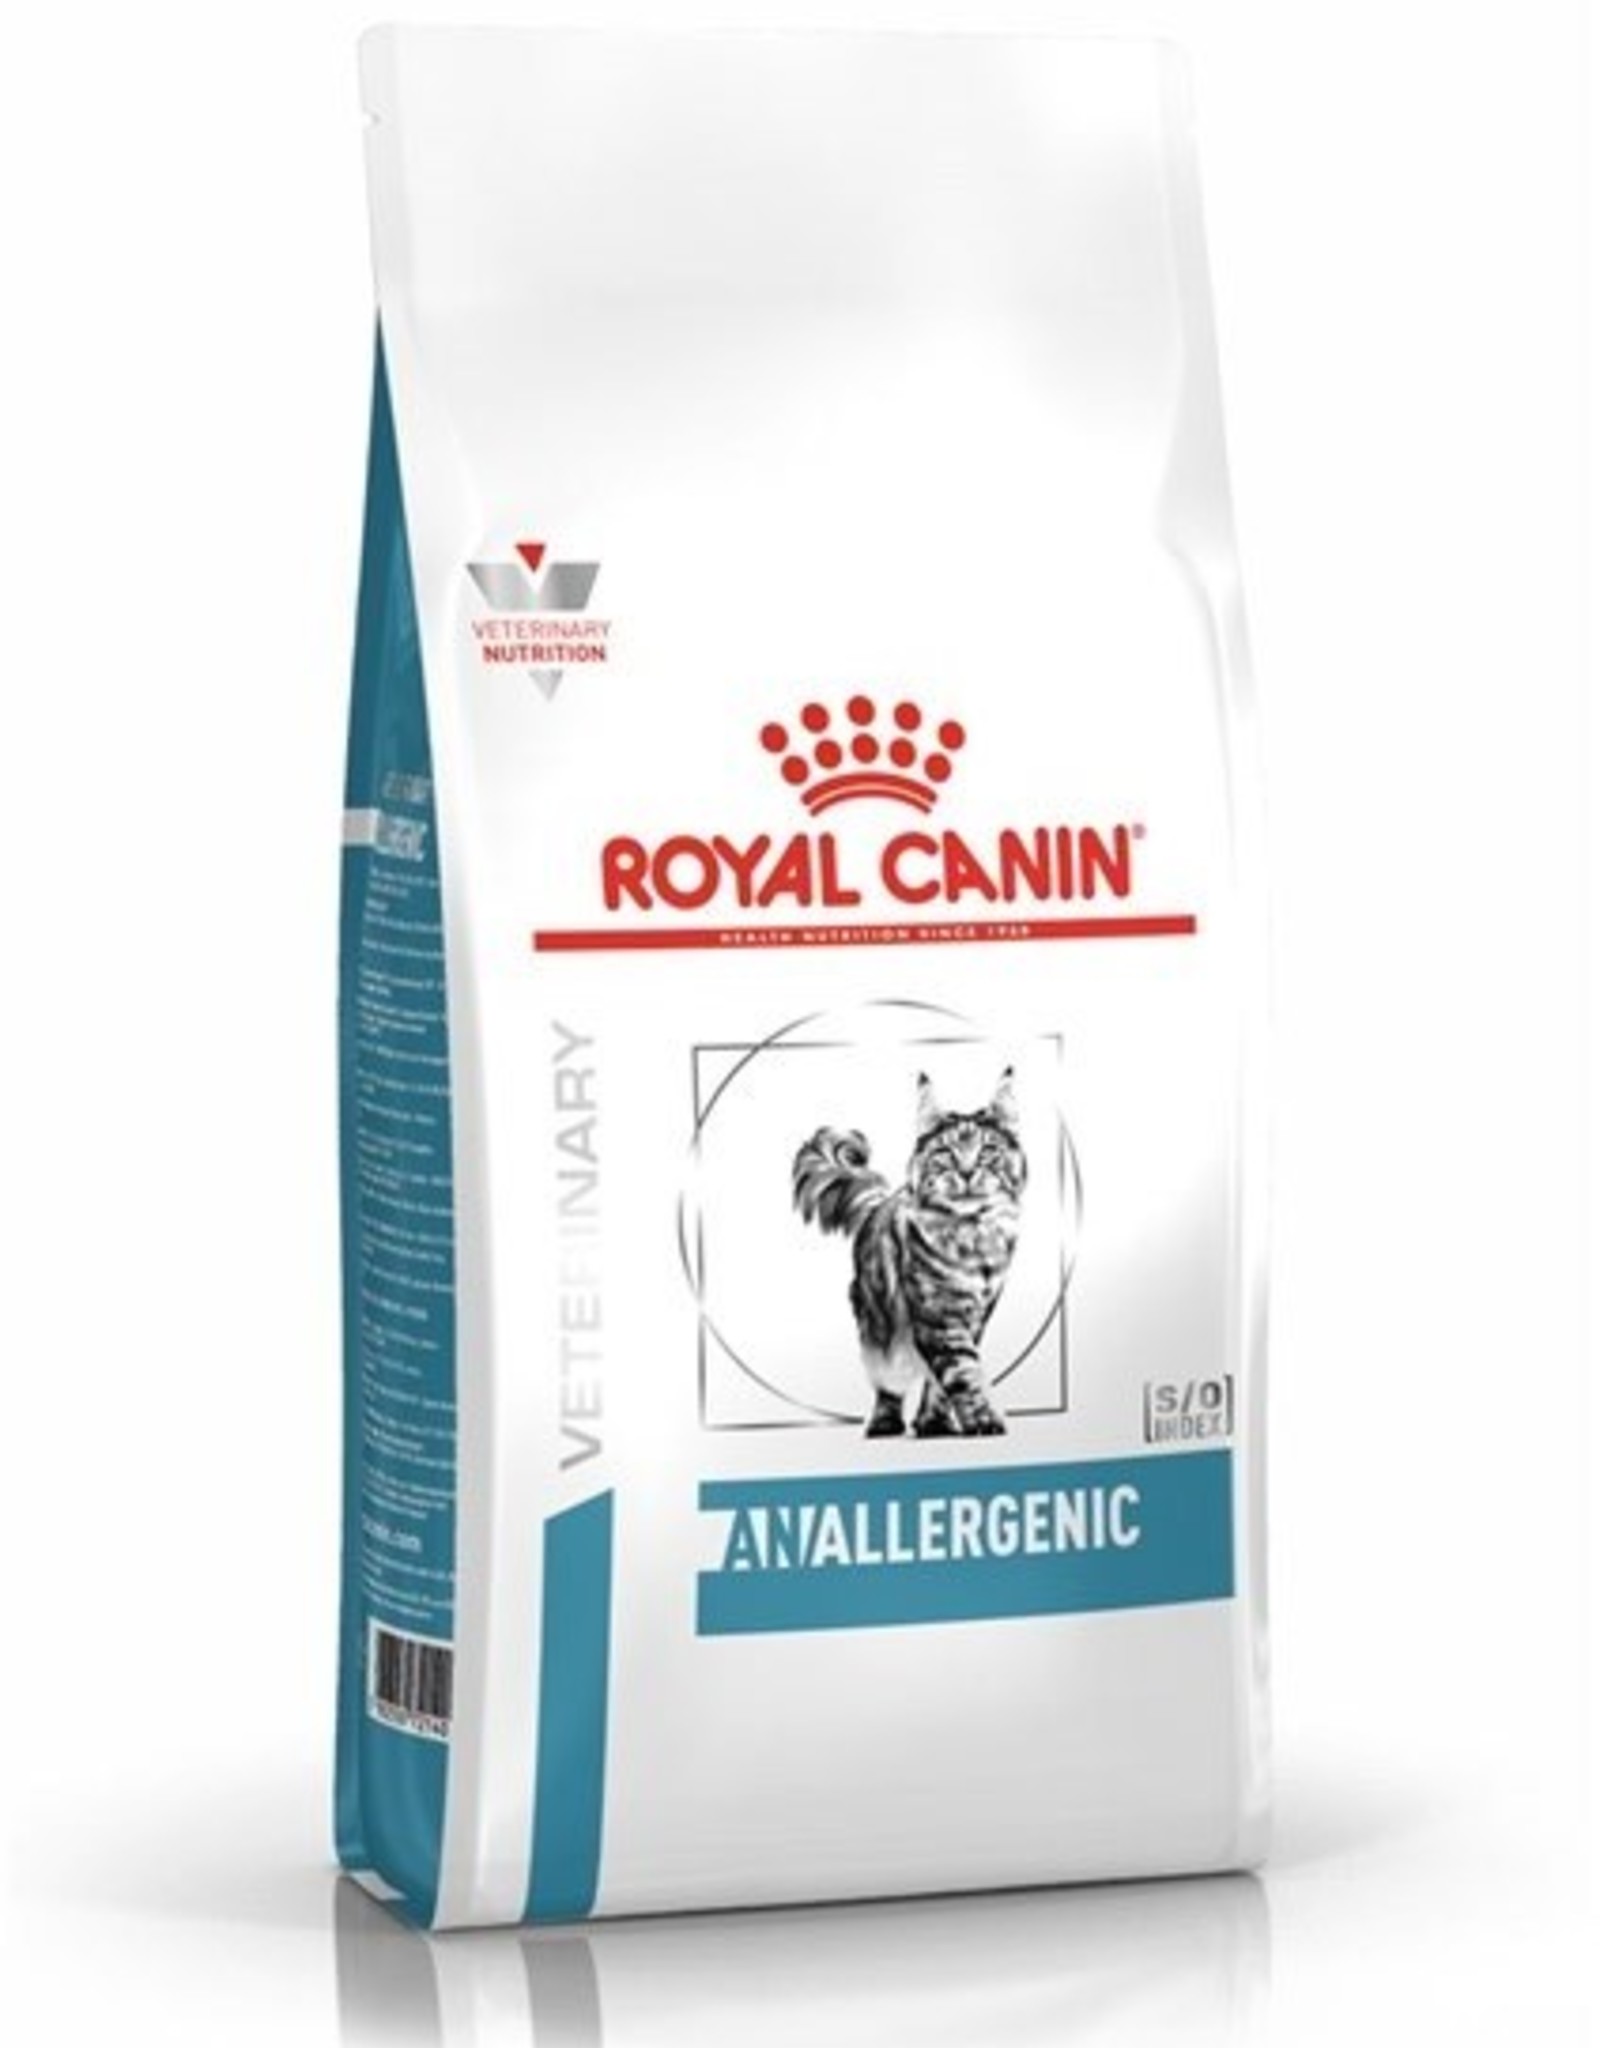 Royal Canin Royal Canin Anallergenic Katze 2kg